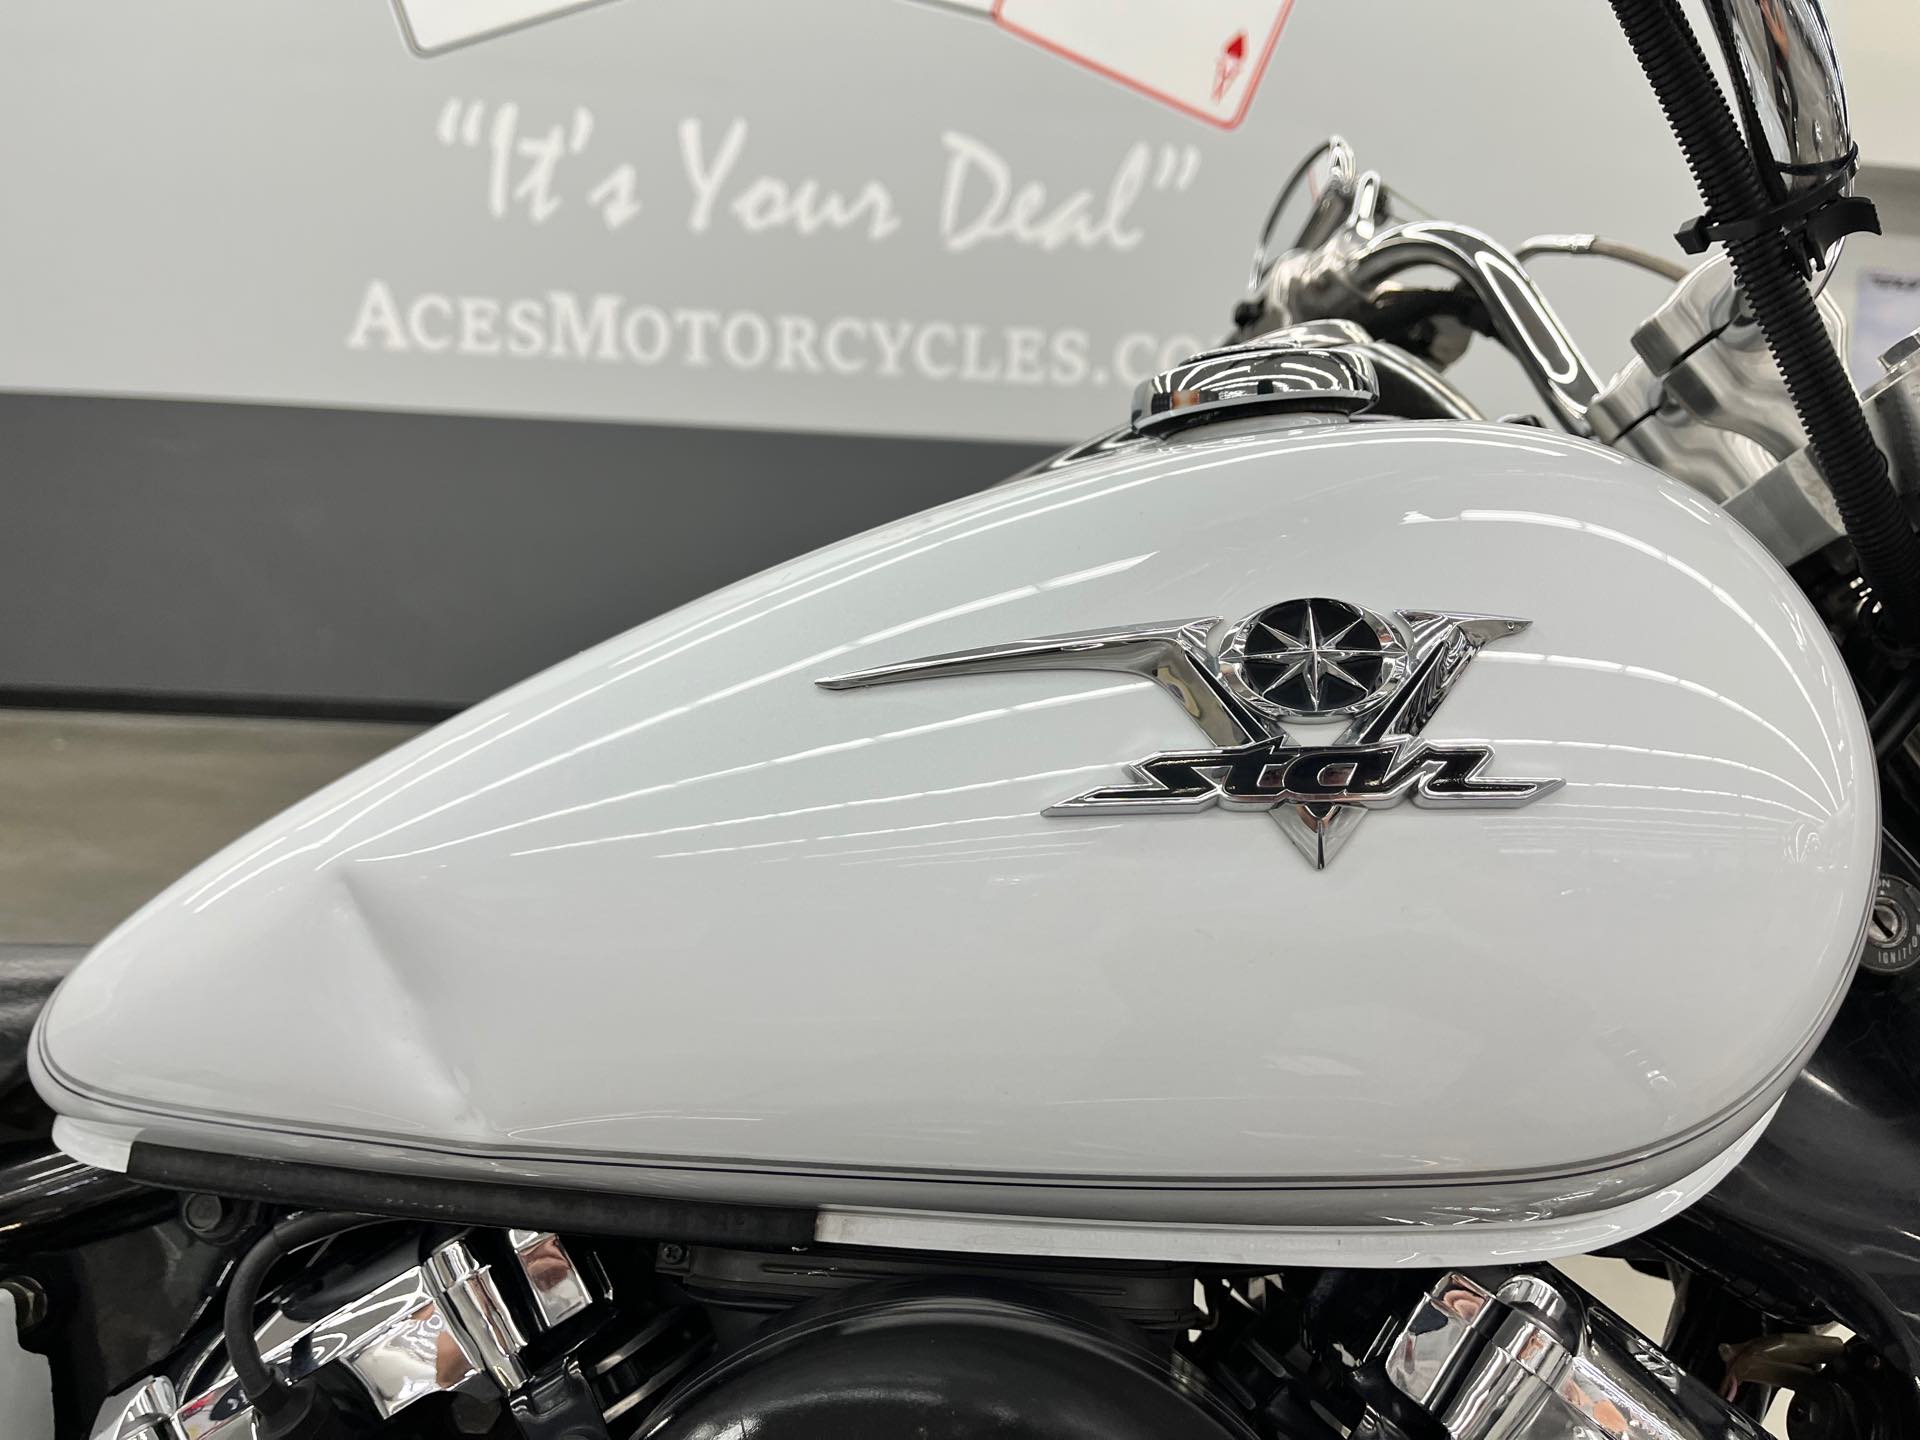 2004 Yamaha V Star Custom at Aces Motorcycles - Denver